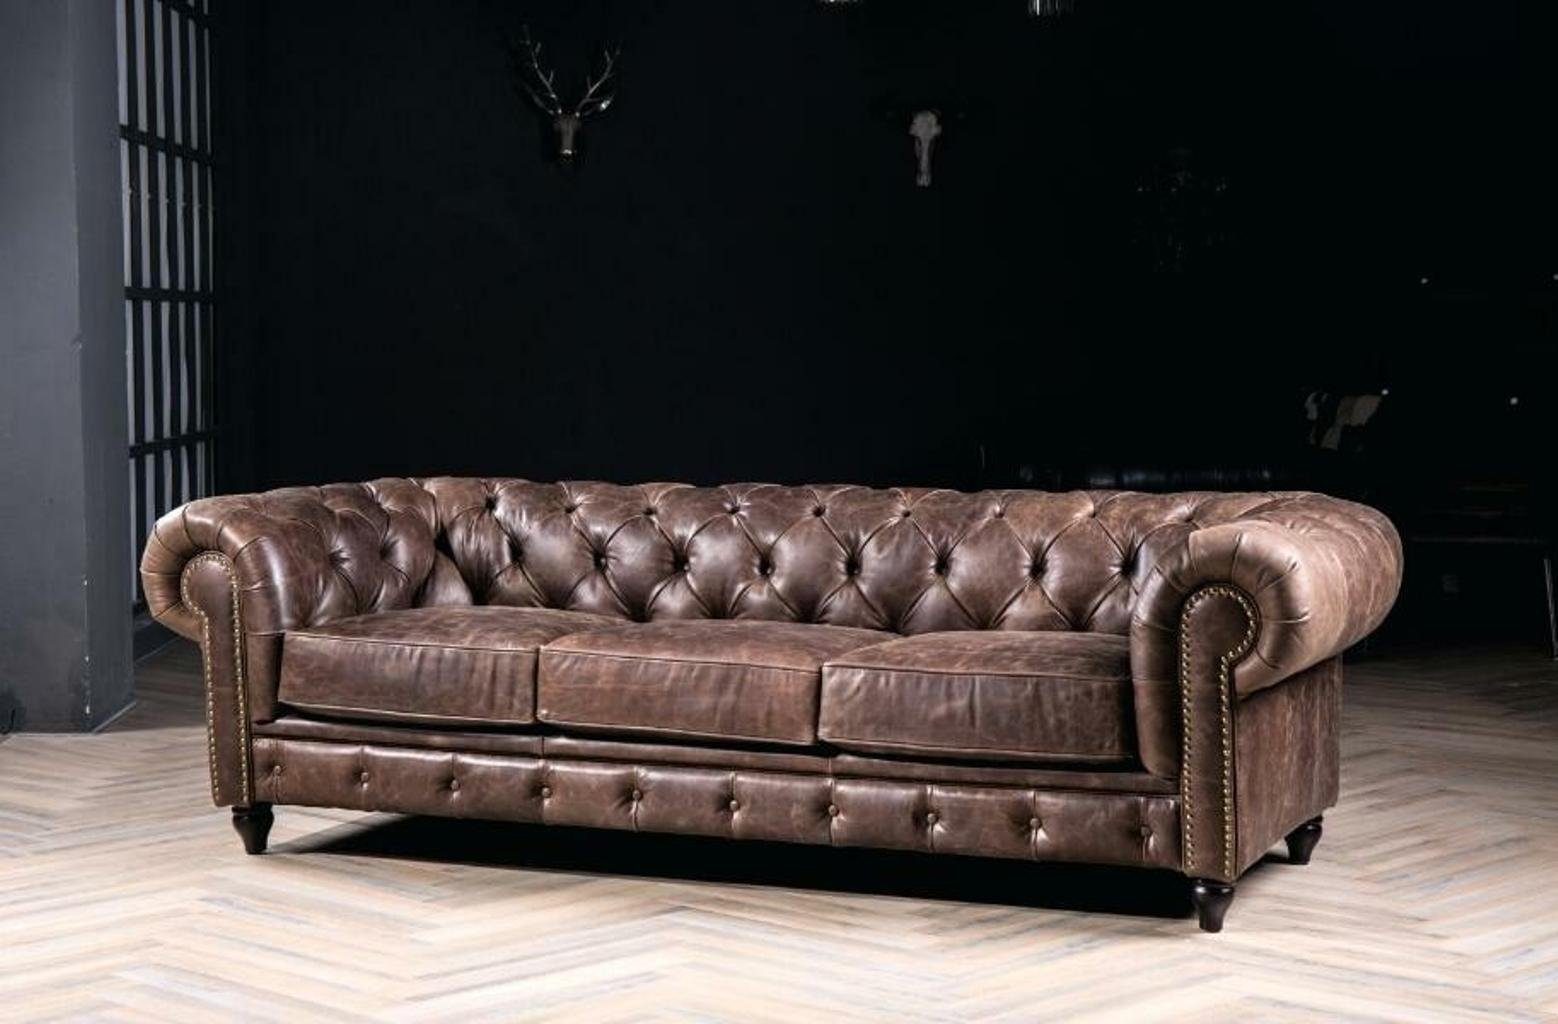 JVmoebel Sofa Chesterfield Design Luxus Polster Sofa Couch Sitz Garnitur, Made in Europe